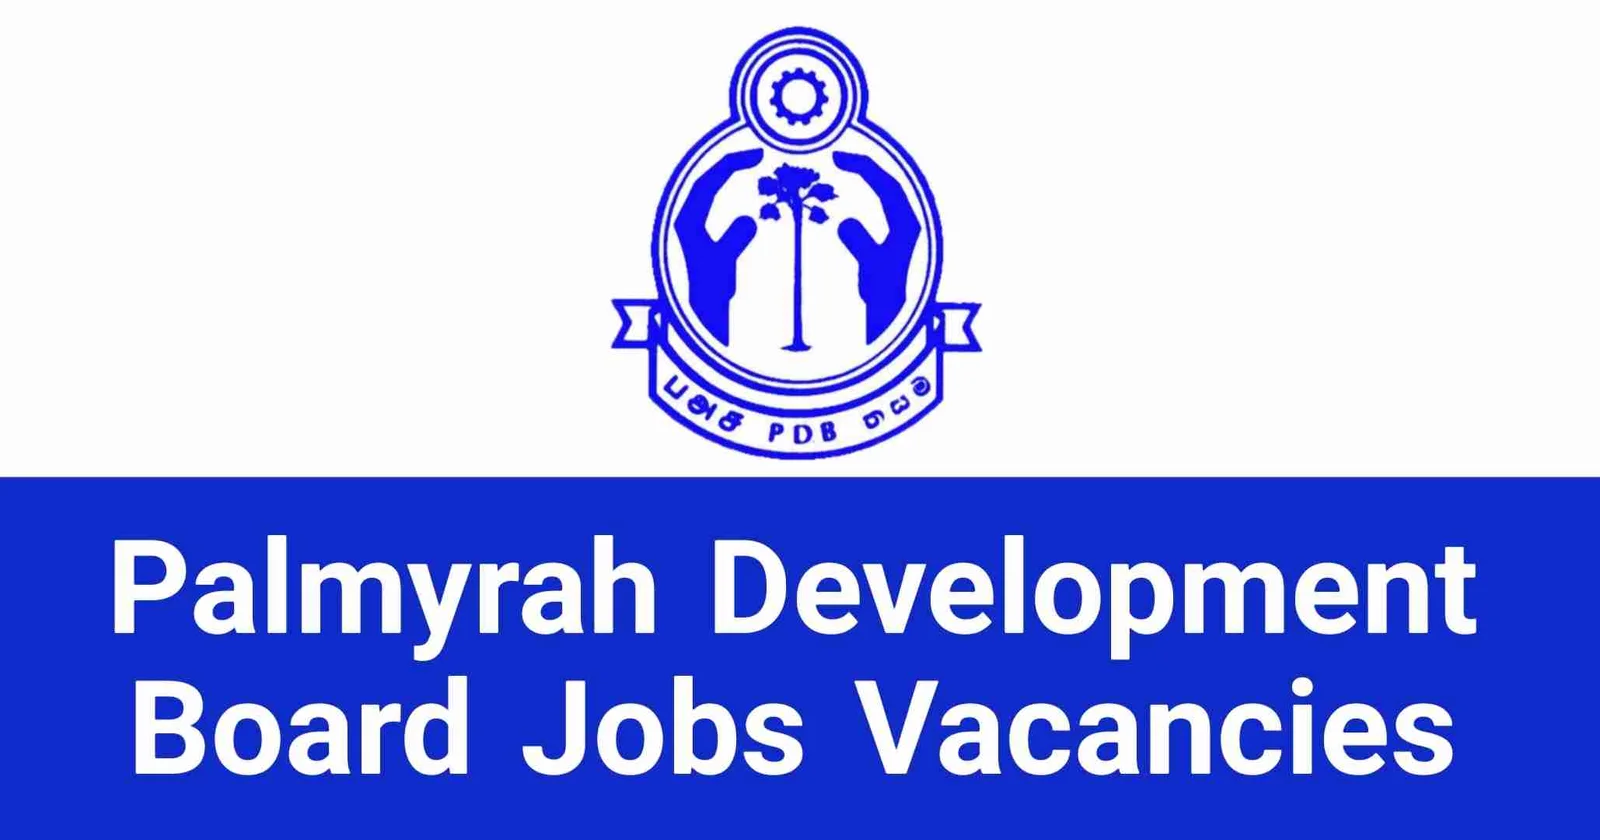 Palmyrah Development Board Jobs Vacancies